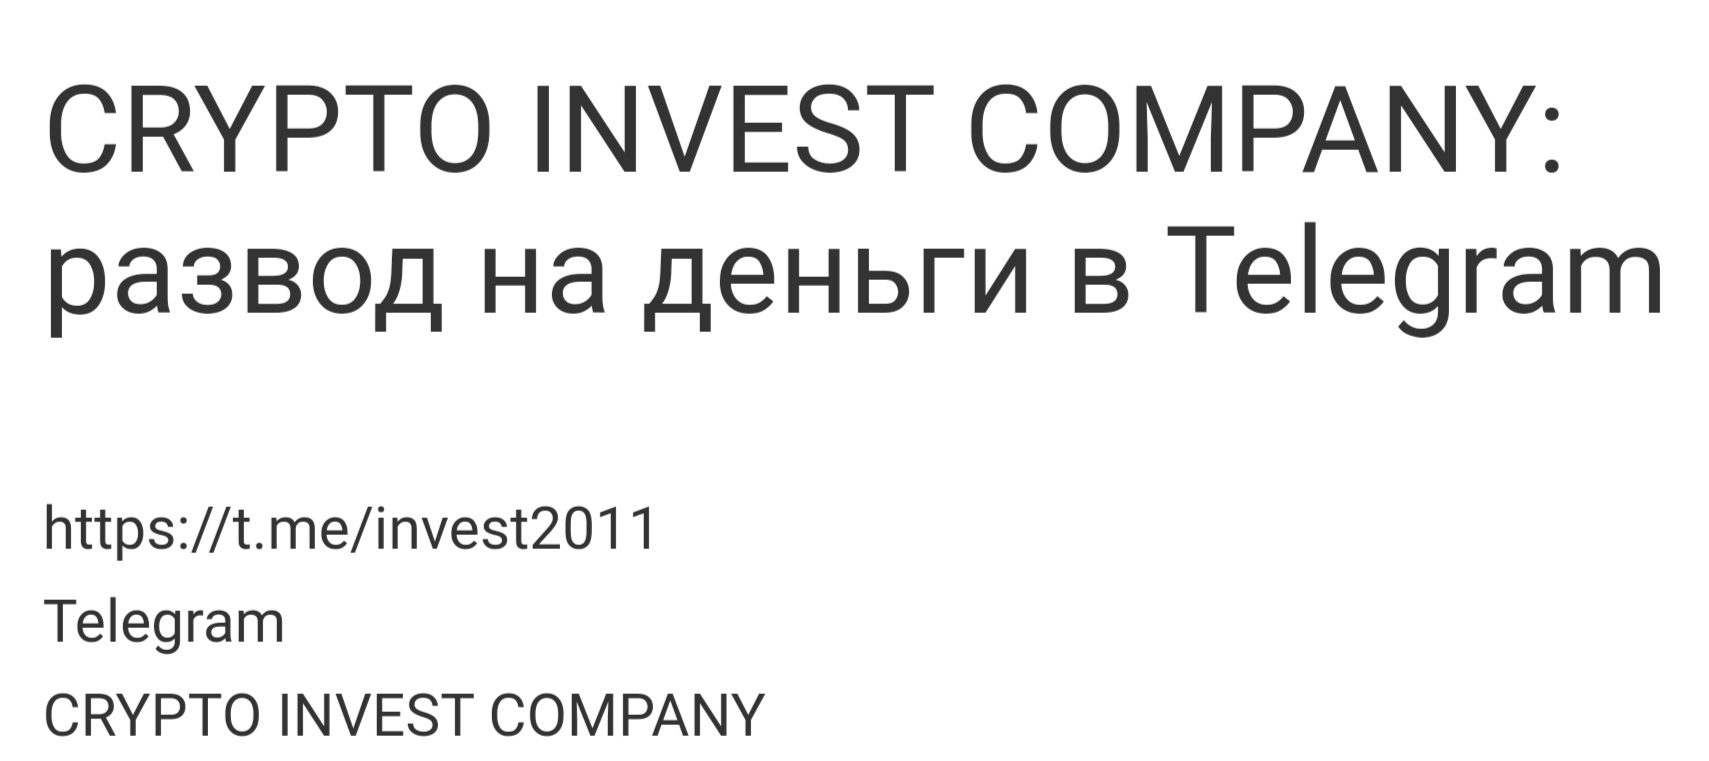 Crypto Invest Company отзывы